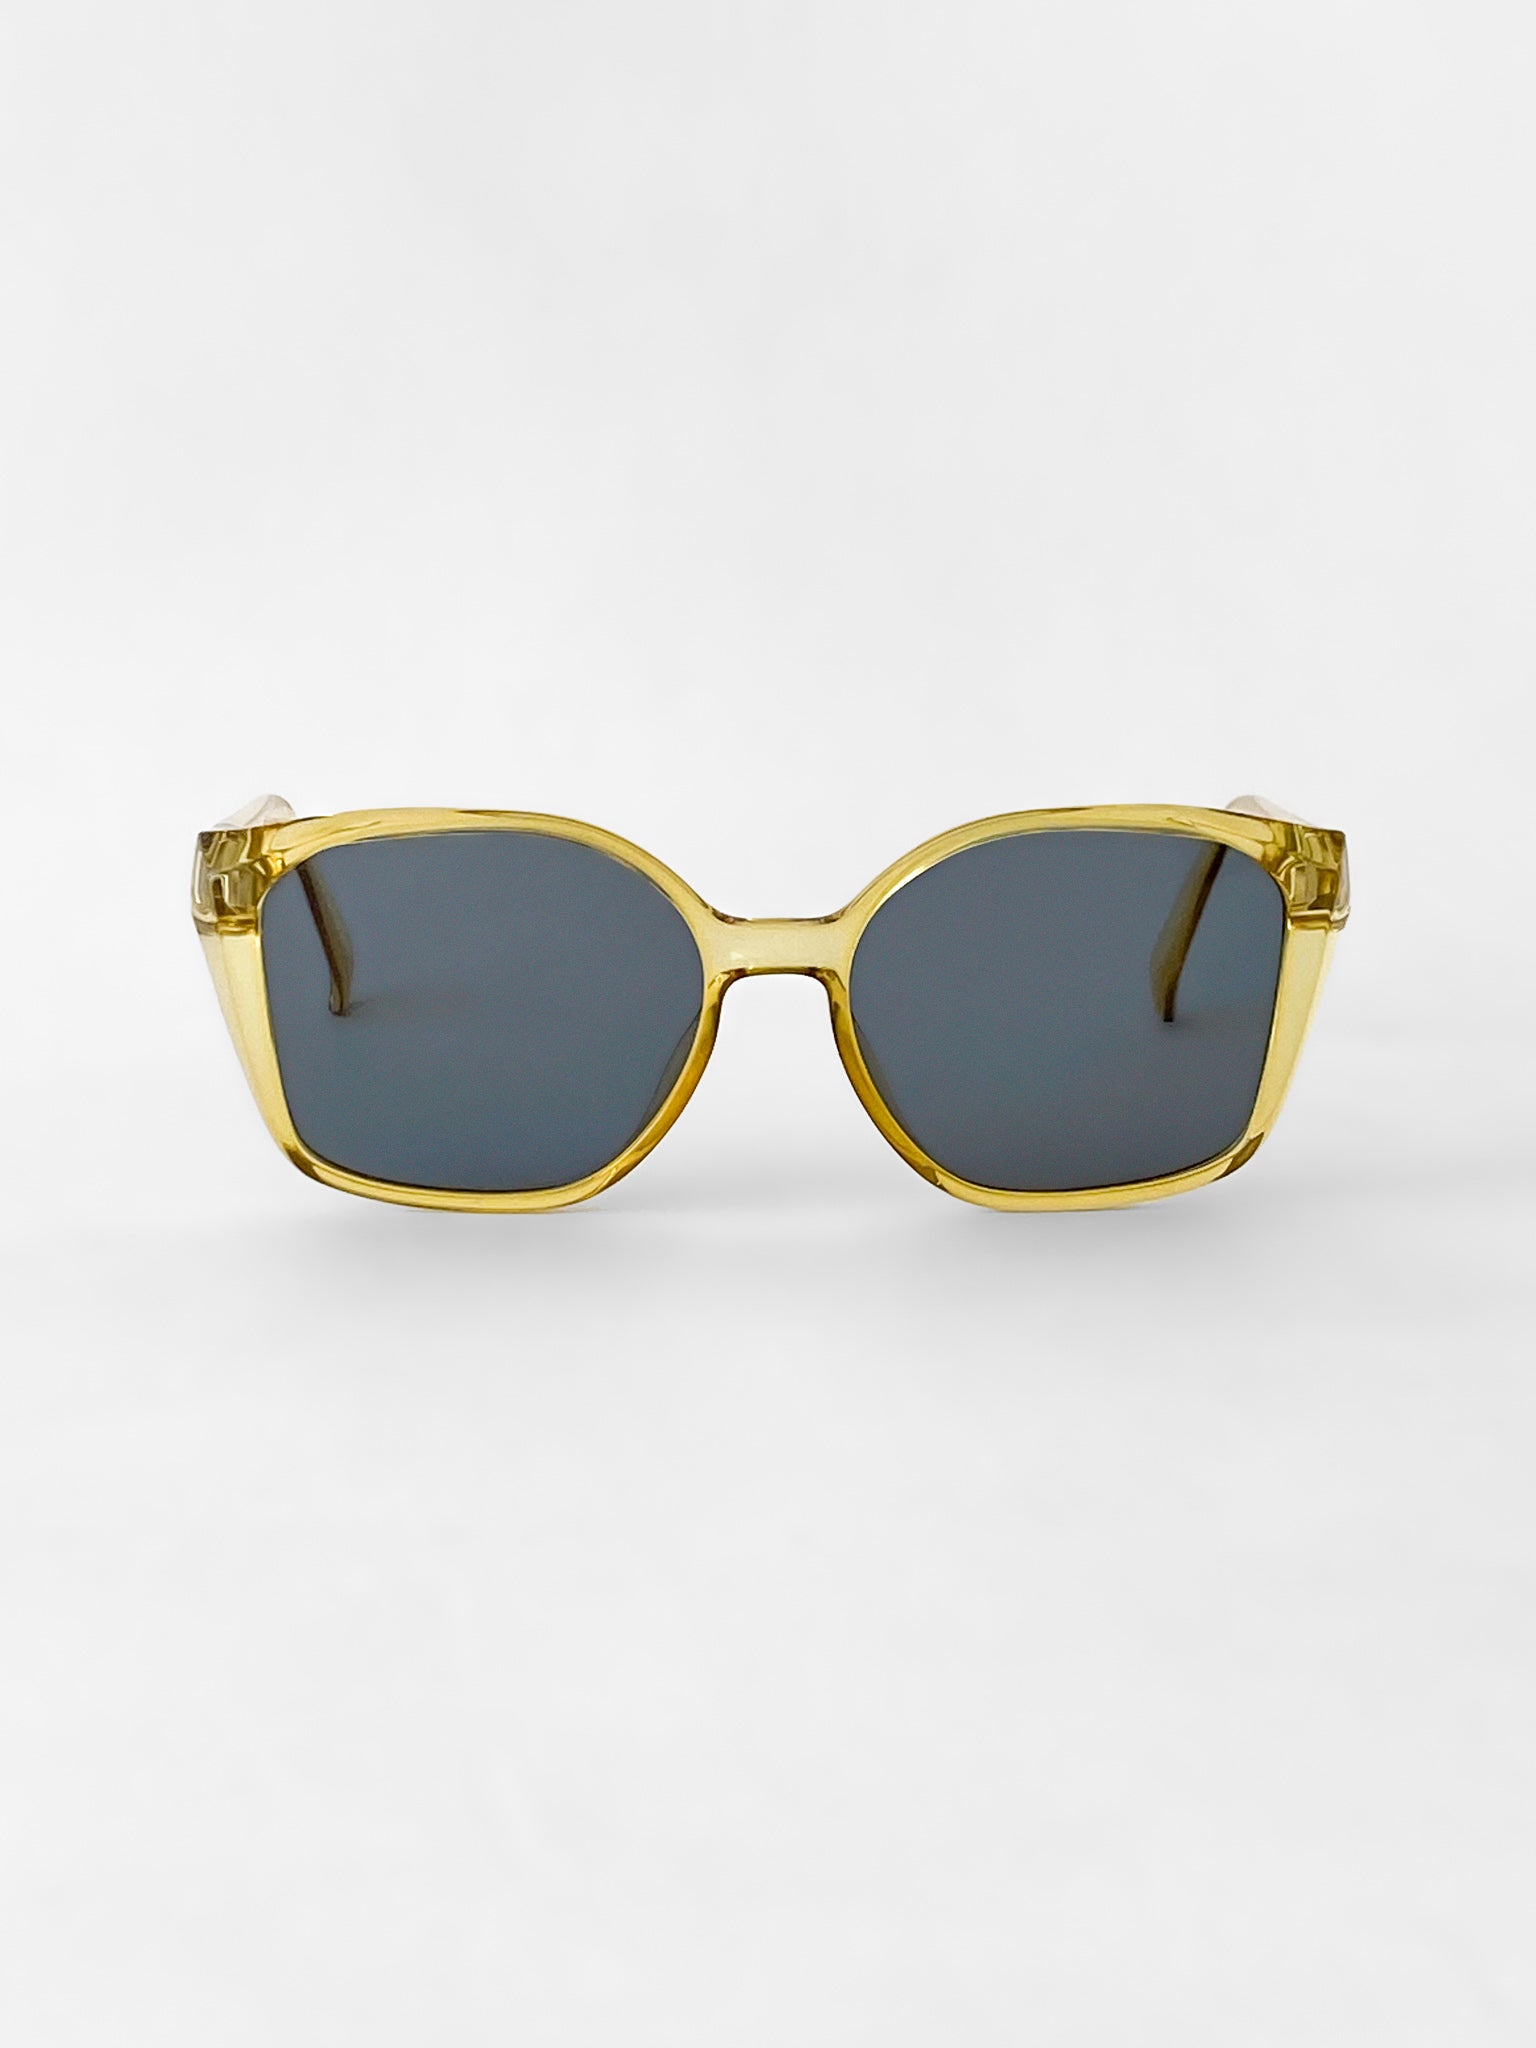 Christian Dior 80's sunglasses